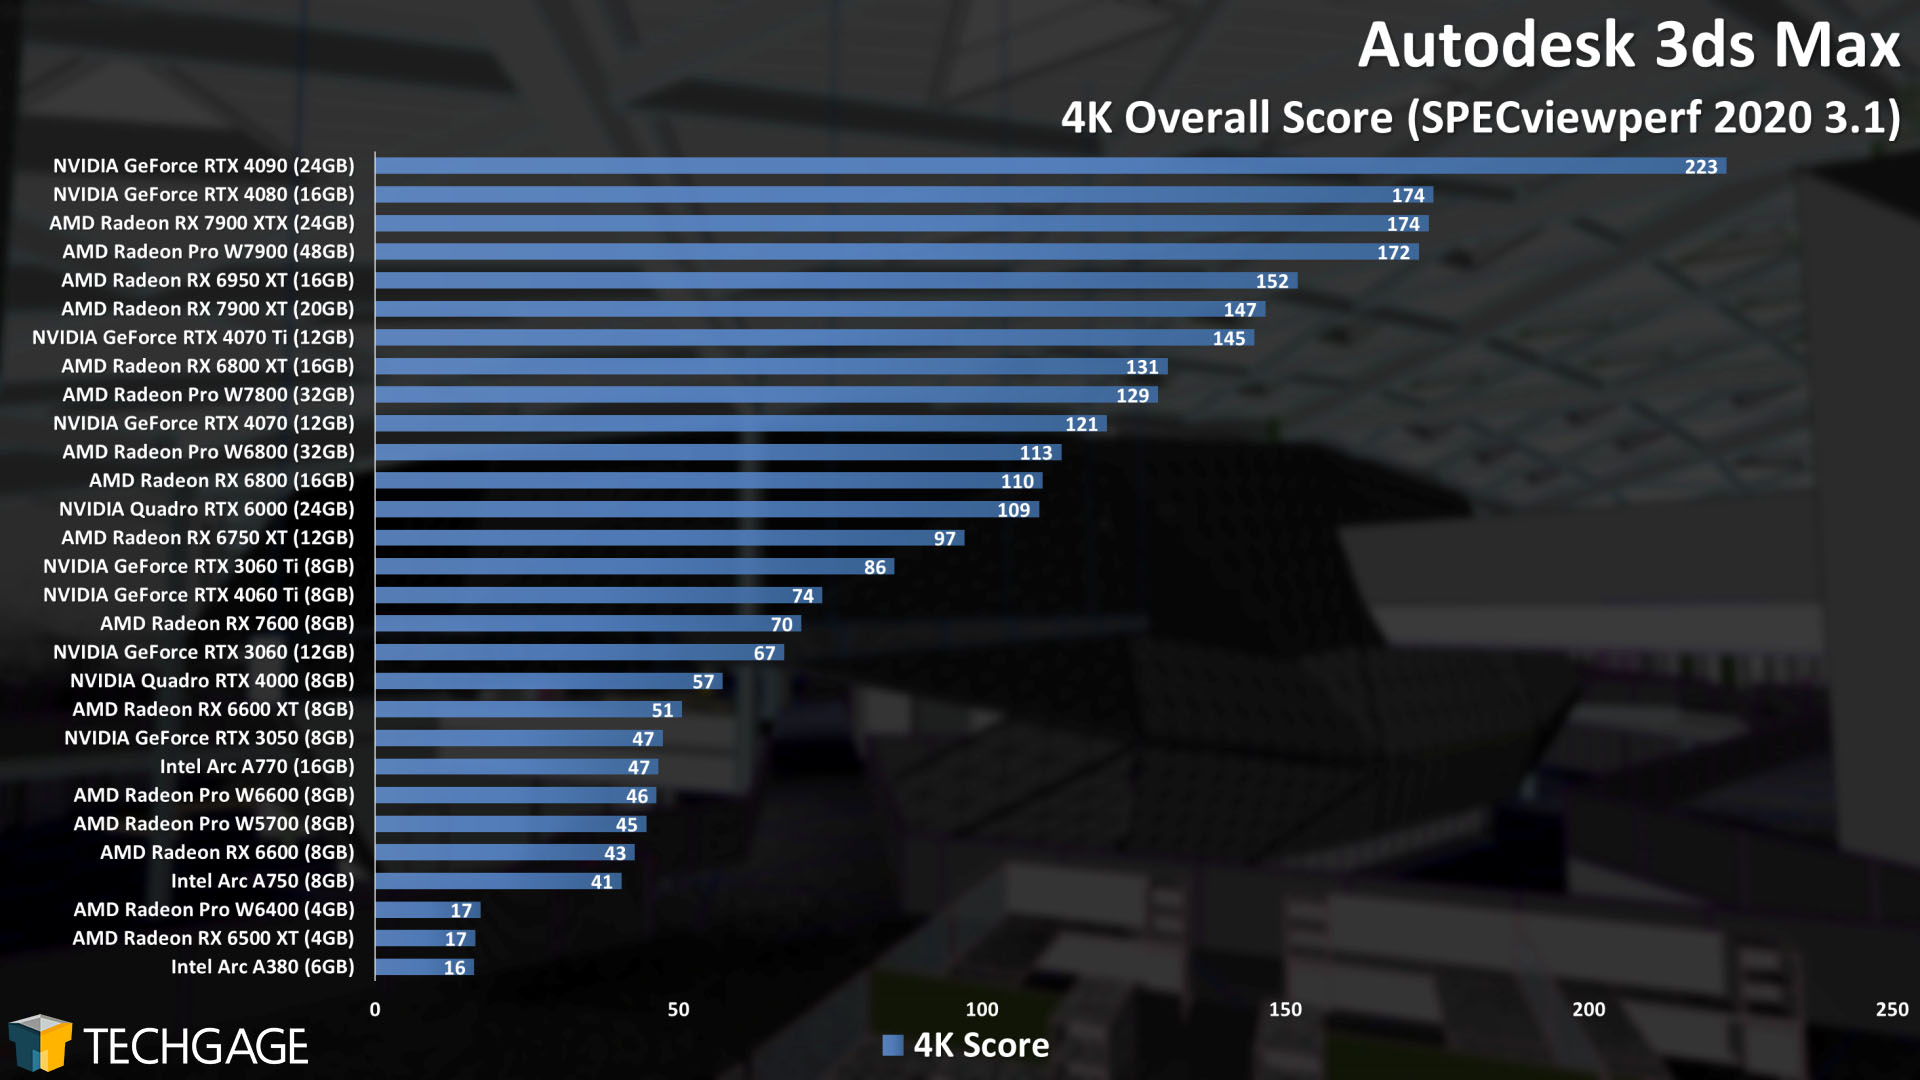 Autodesk 3ds Max - 2160p Viewport Performance